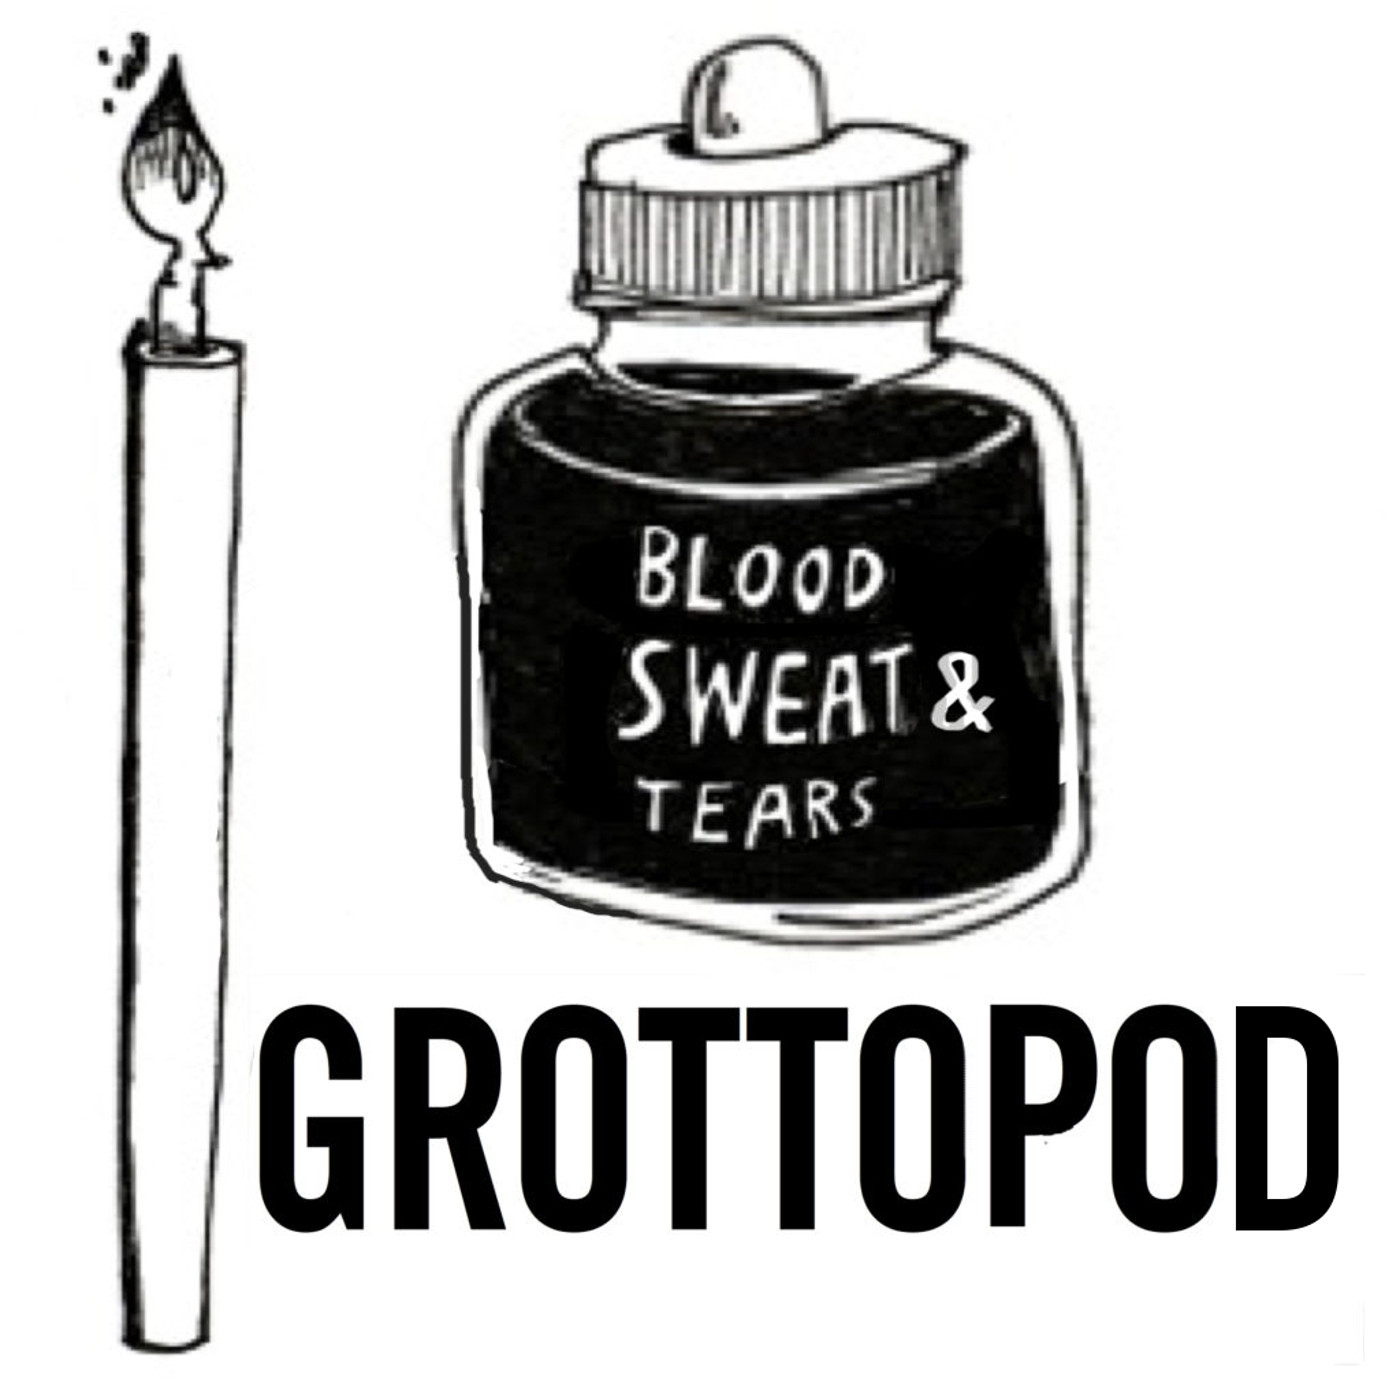 GrottoPod